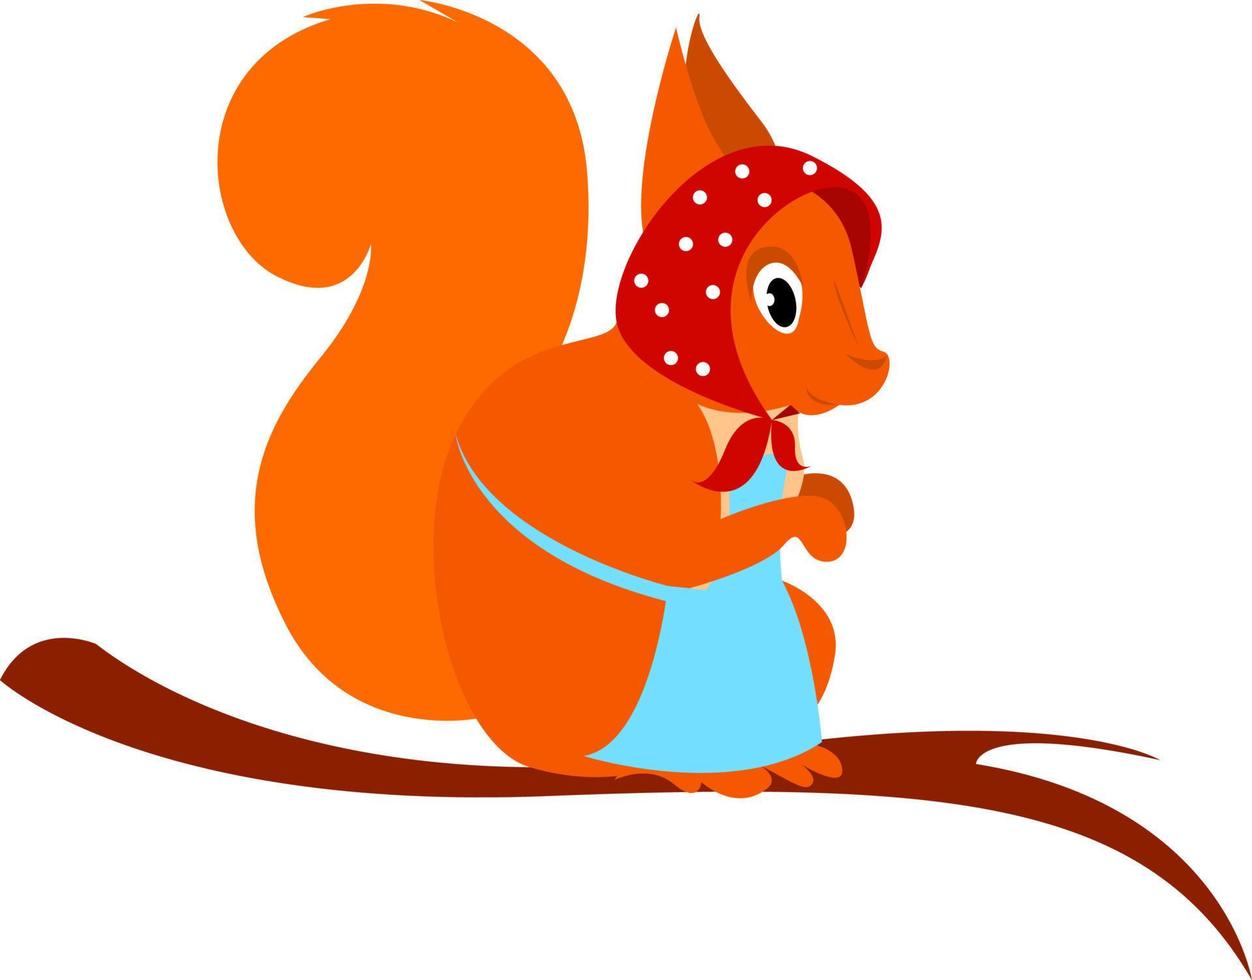 Little squirrel, illustration, vector on white background.